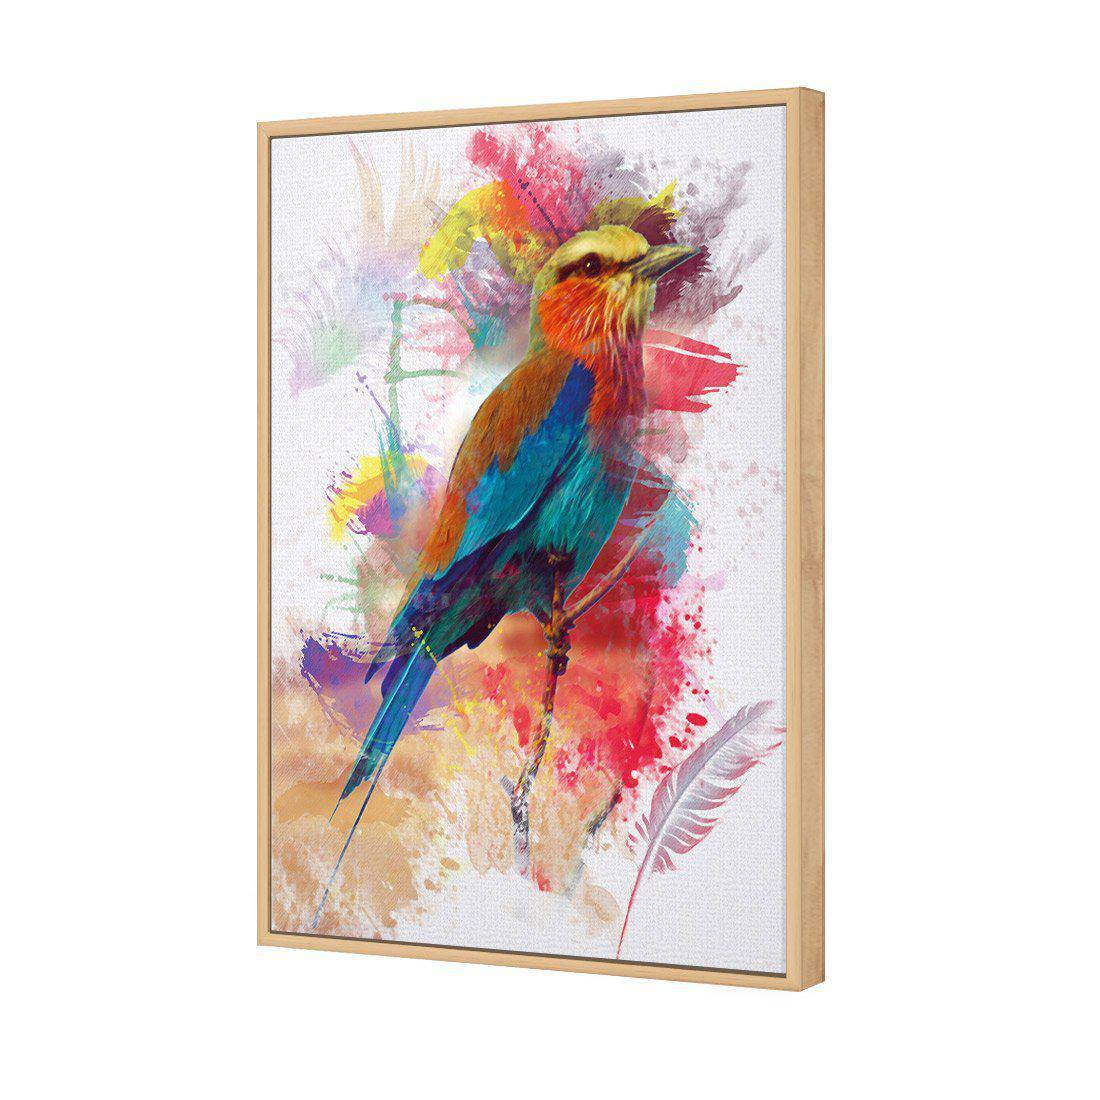 Painted Bird And Feathers Canvas Art-Canvas-Wall Art Designs-45x30cm-Canvas - Oak Frame-Wall Art Designs